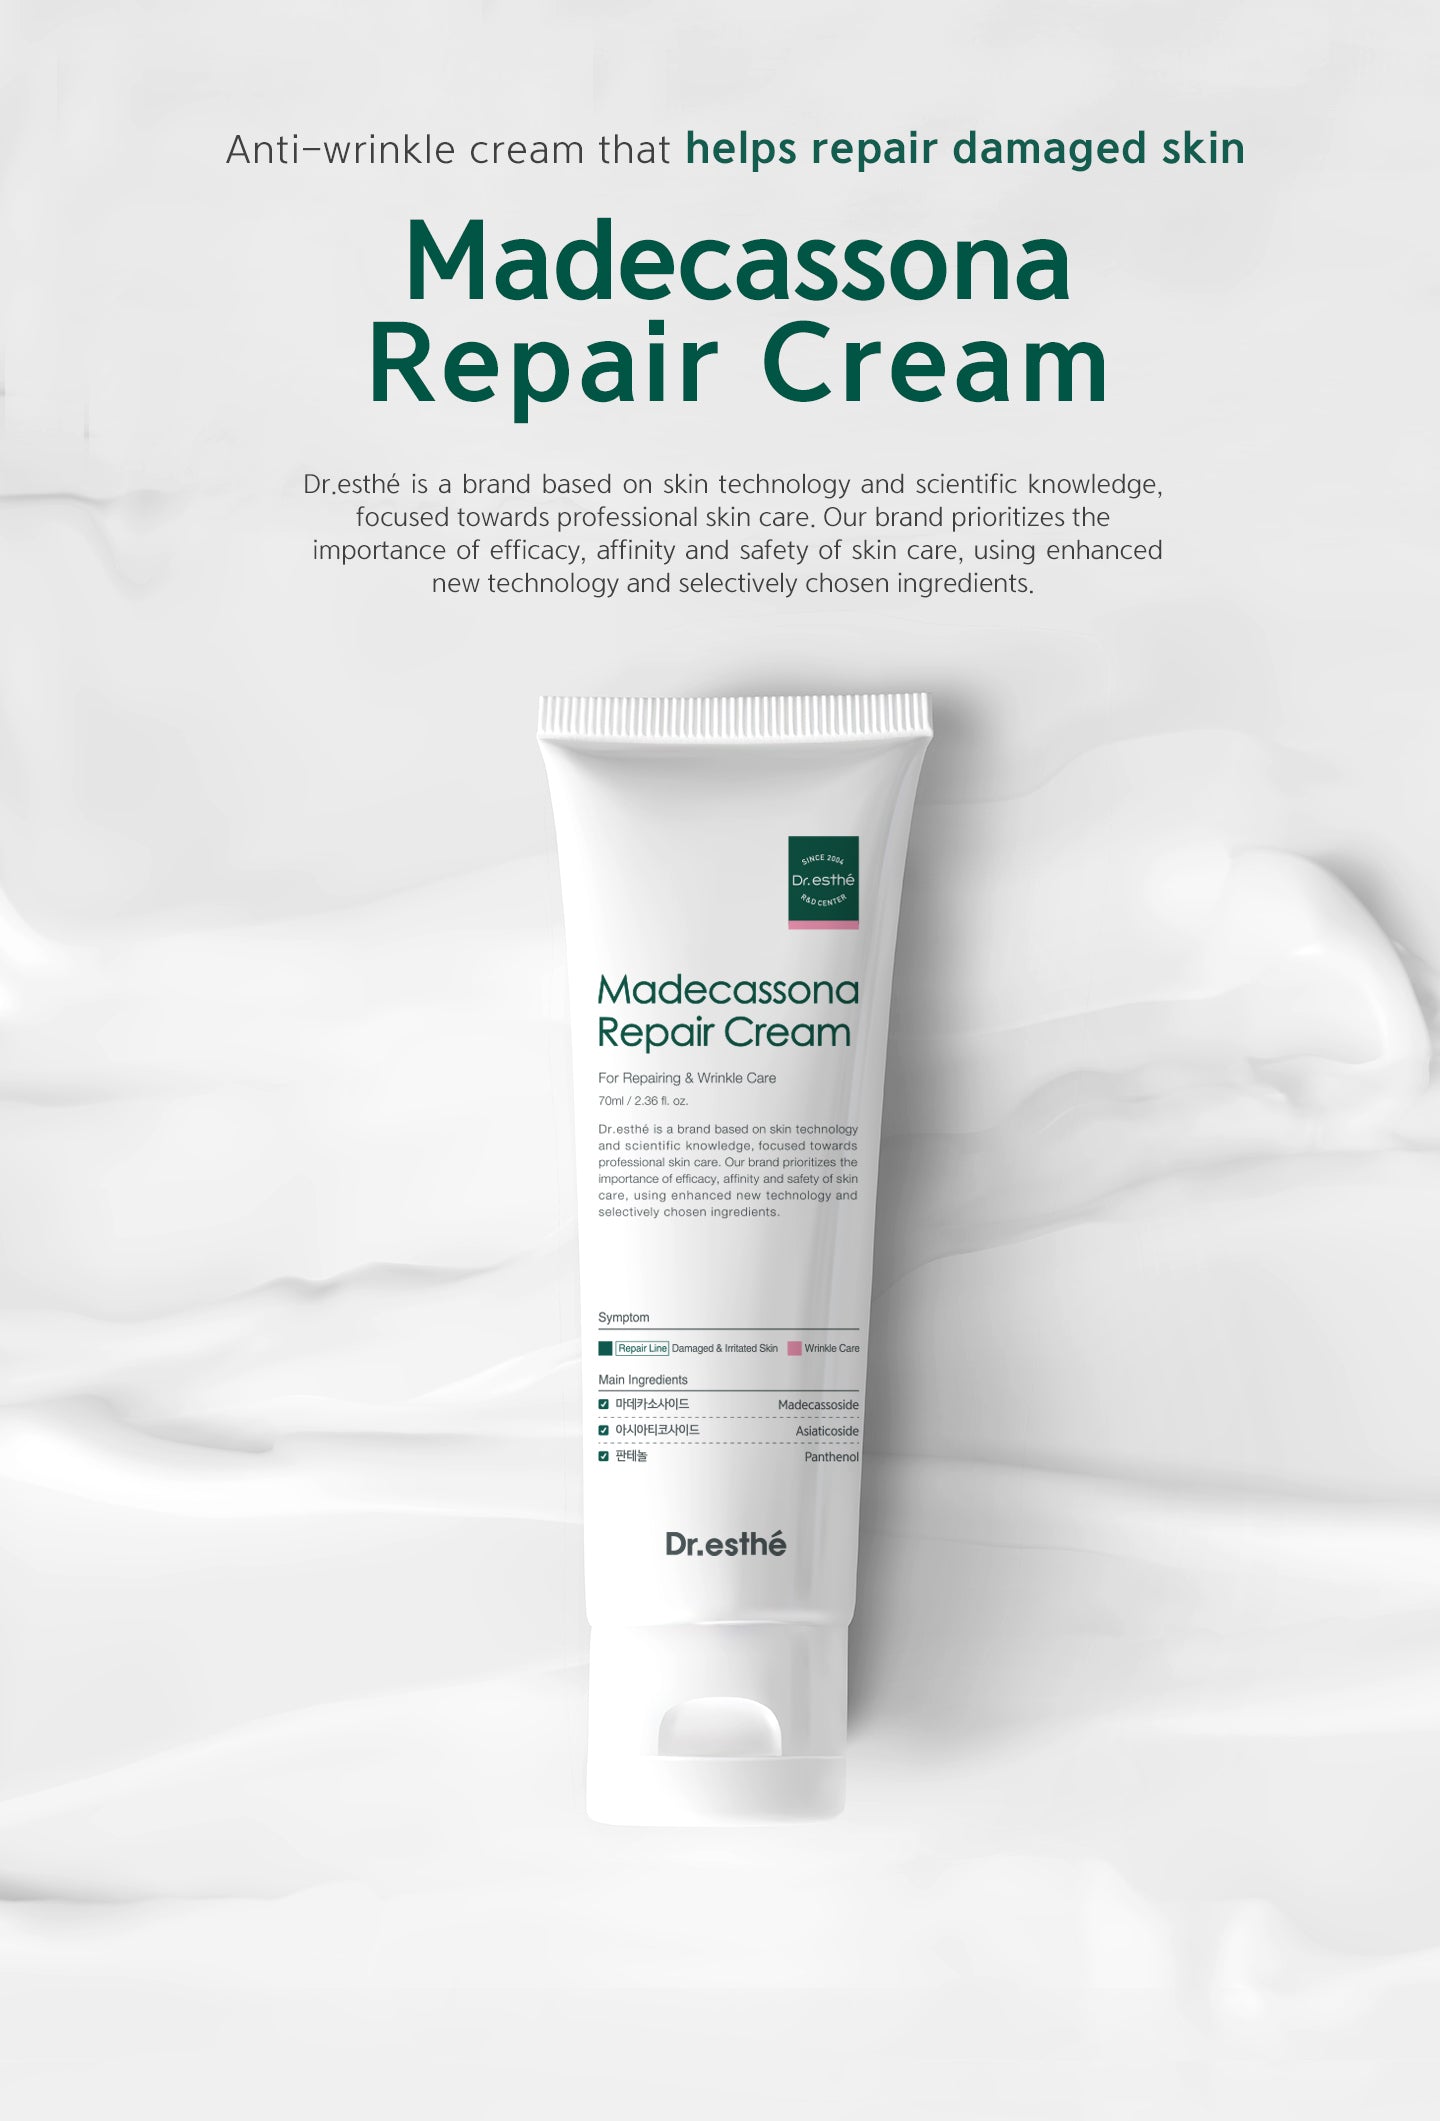 Madecassona repair cream : anti-wrinkle cream the helps repair damaged skin. 